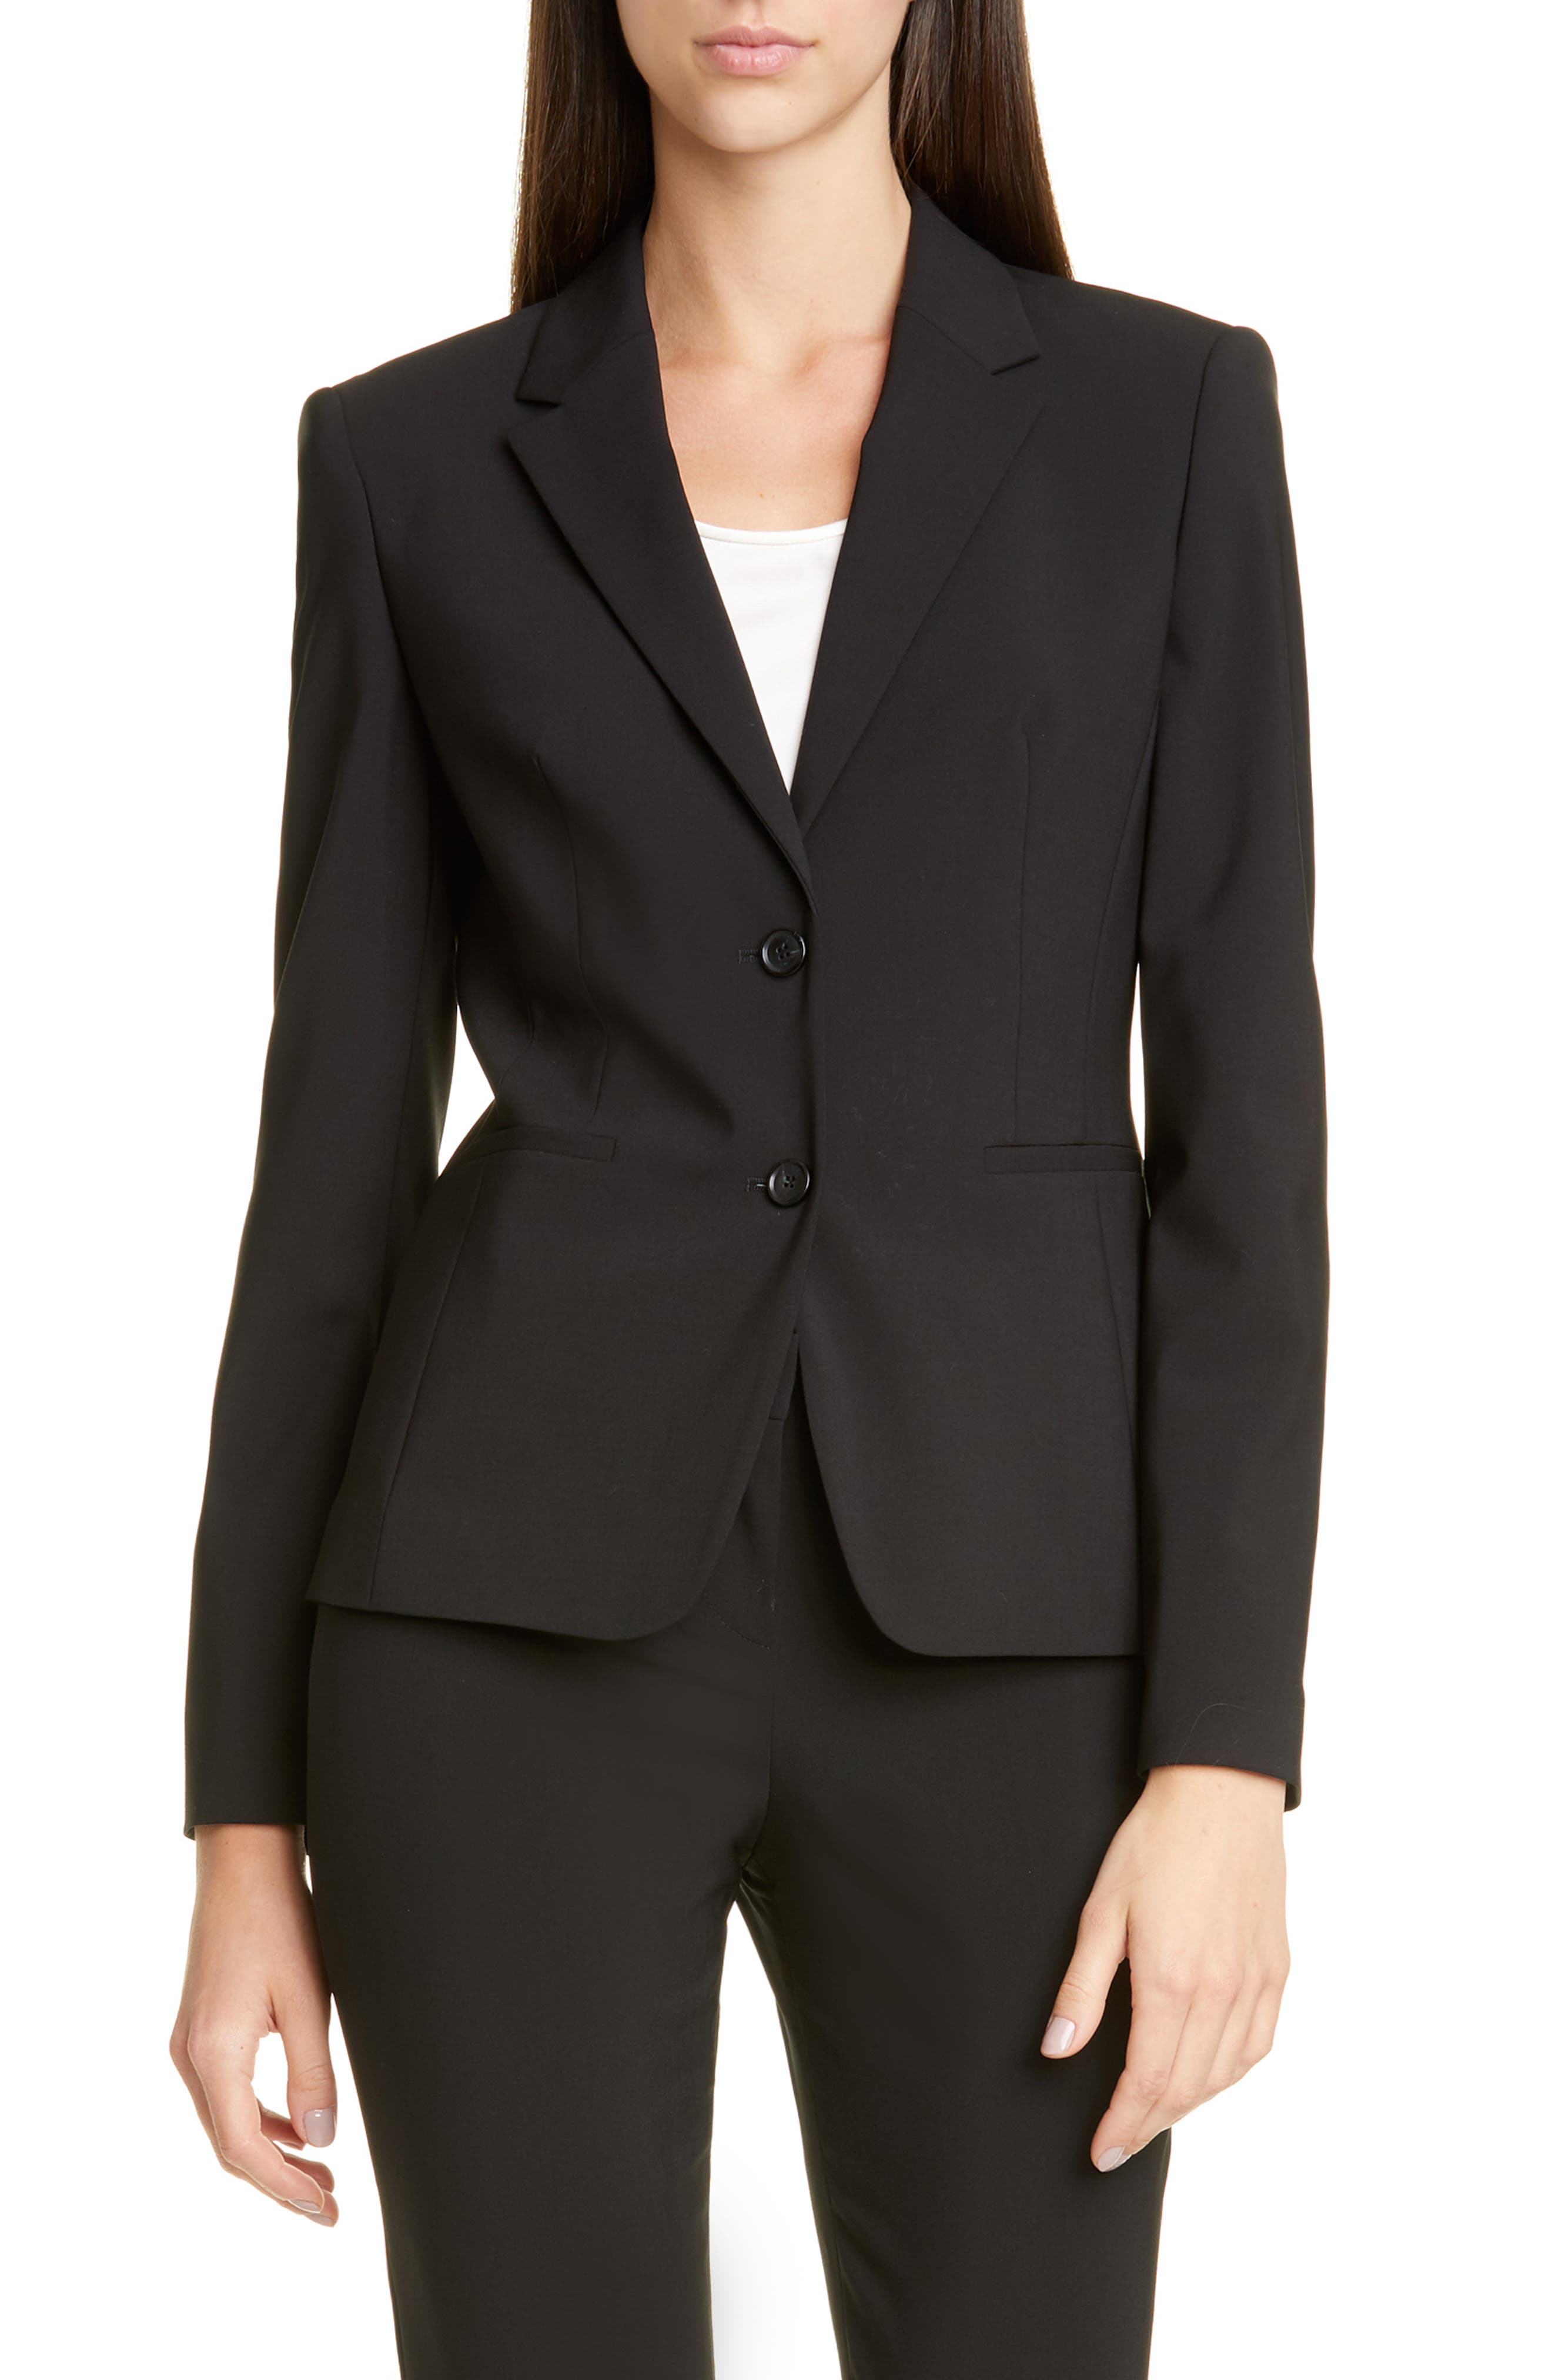 boss women's suits sale